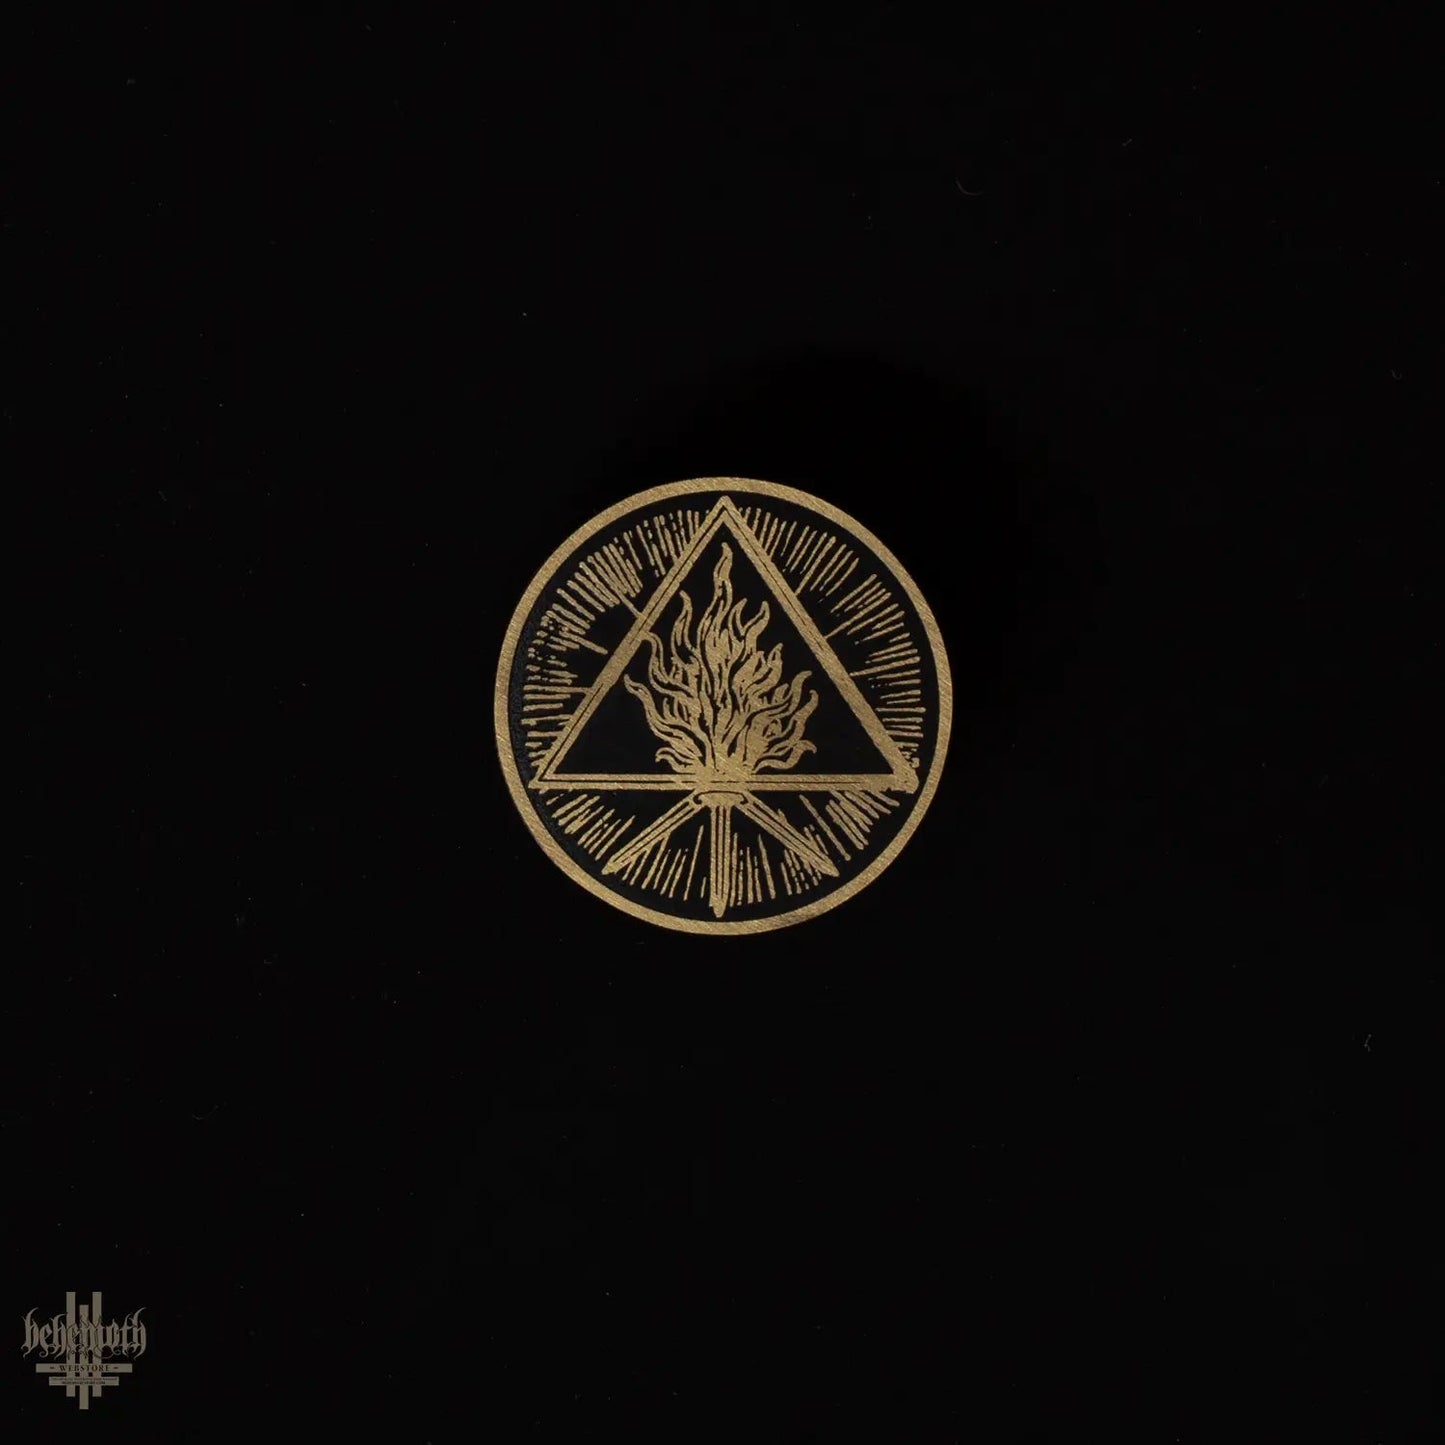 Behemoth 'The Unholy Trinity' brass pin